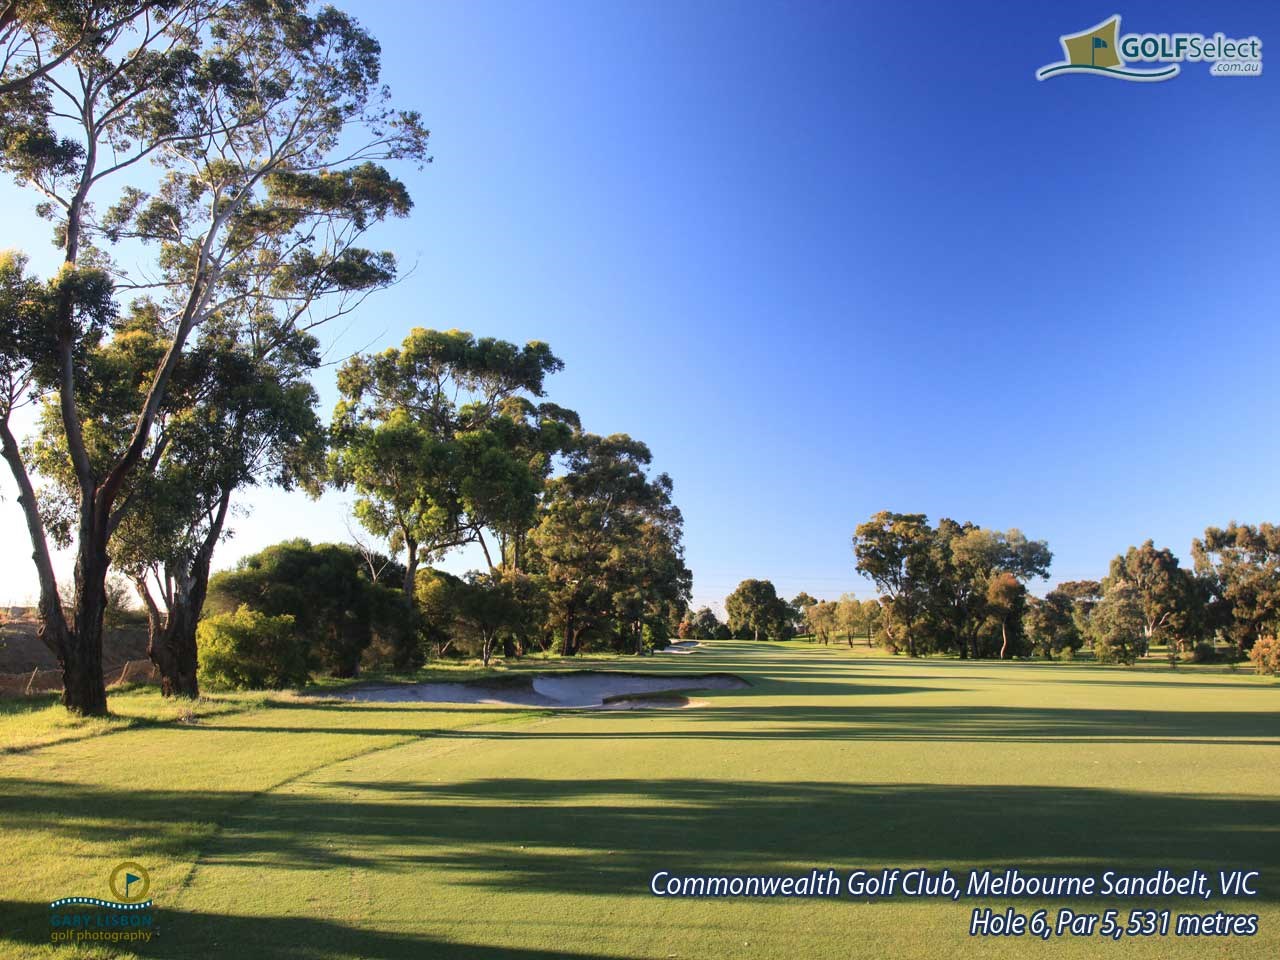 Commonwealth Golf Club Hole 6, Par 5, 531 metres